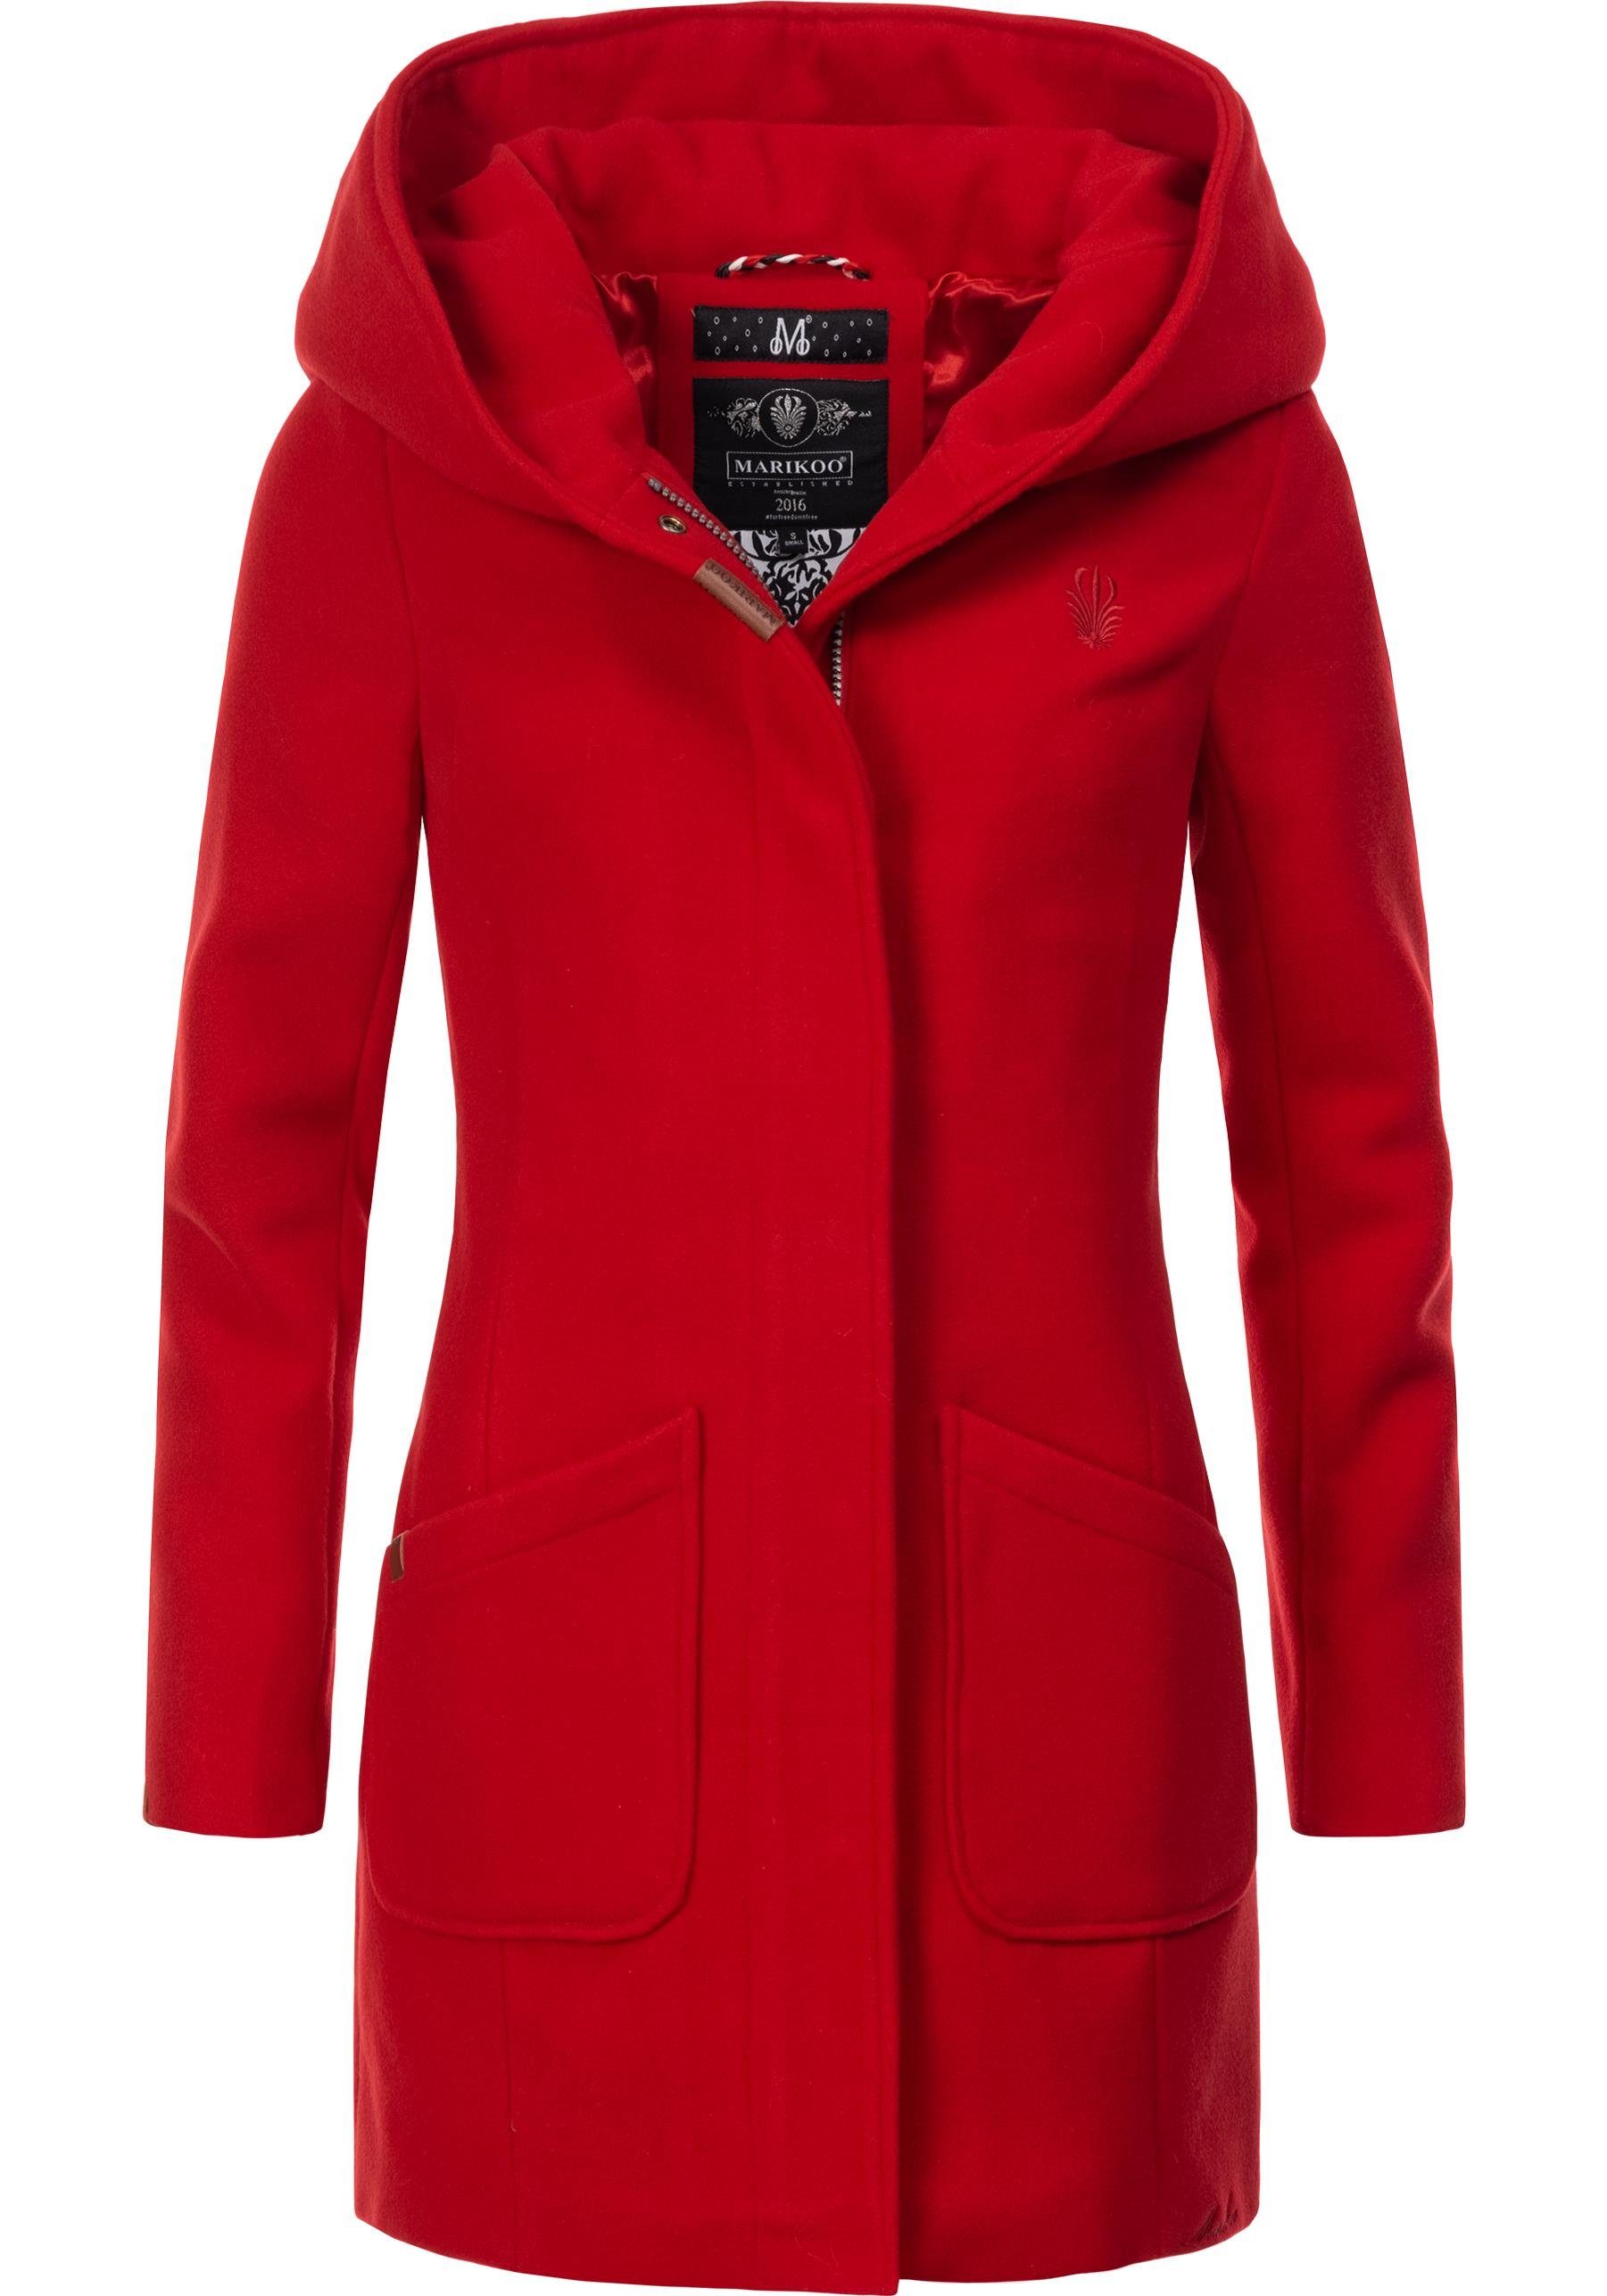 Marikoo Wintermantel Maikoo hochwertiger Mantel mit großer Kapuze rot